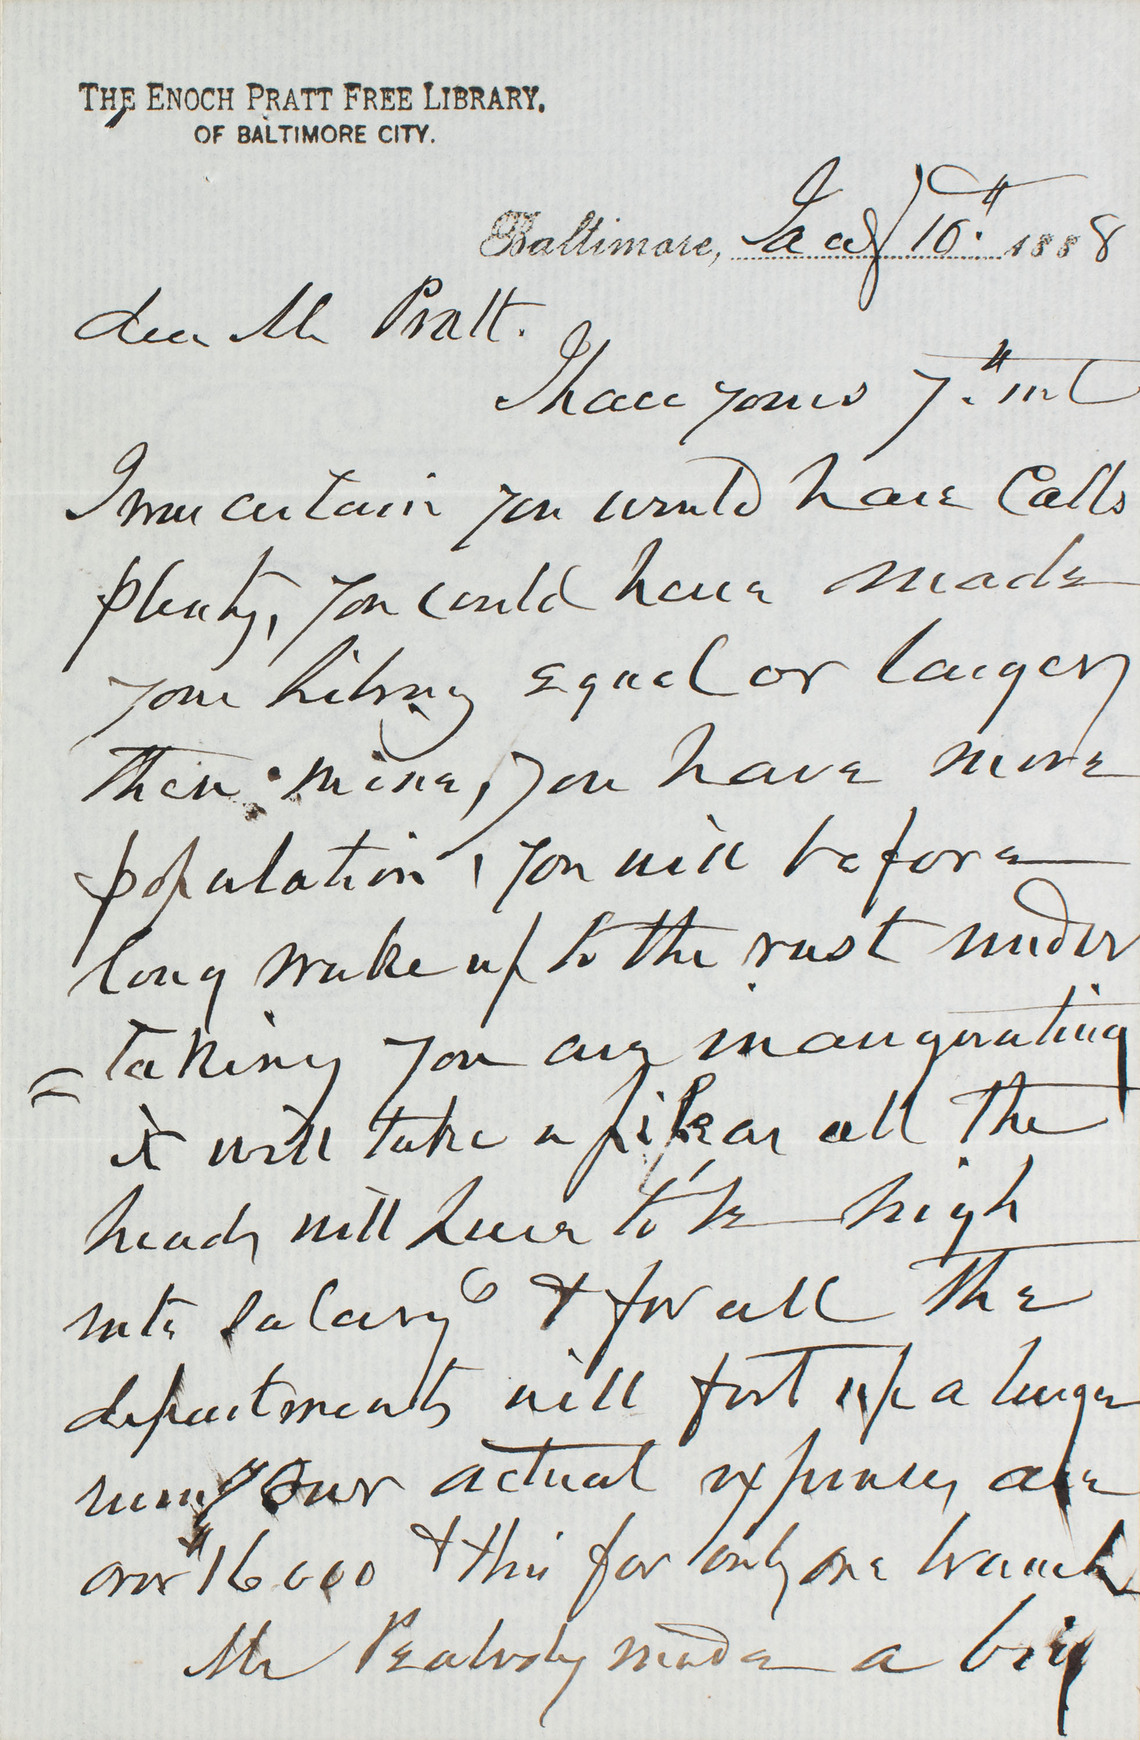 Letter from Enoch Pratt to Charles Pratt